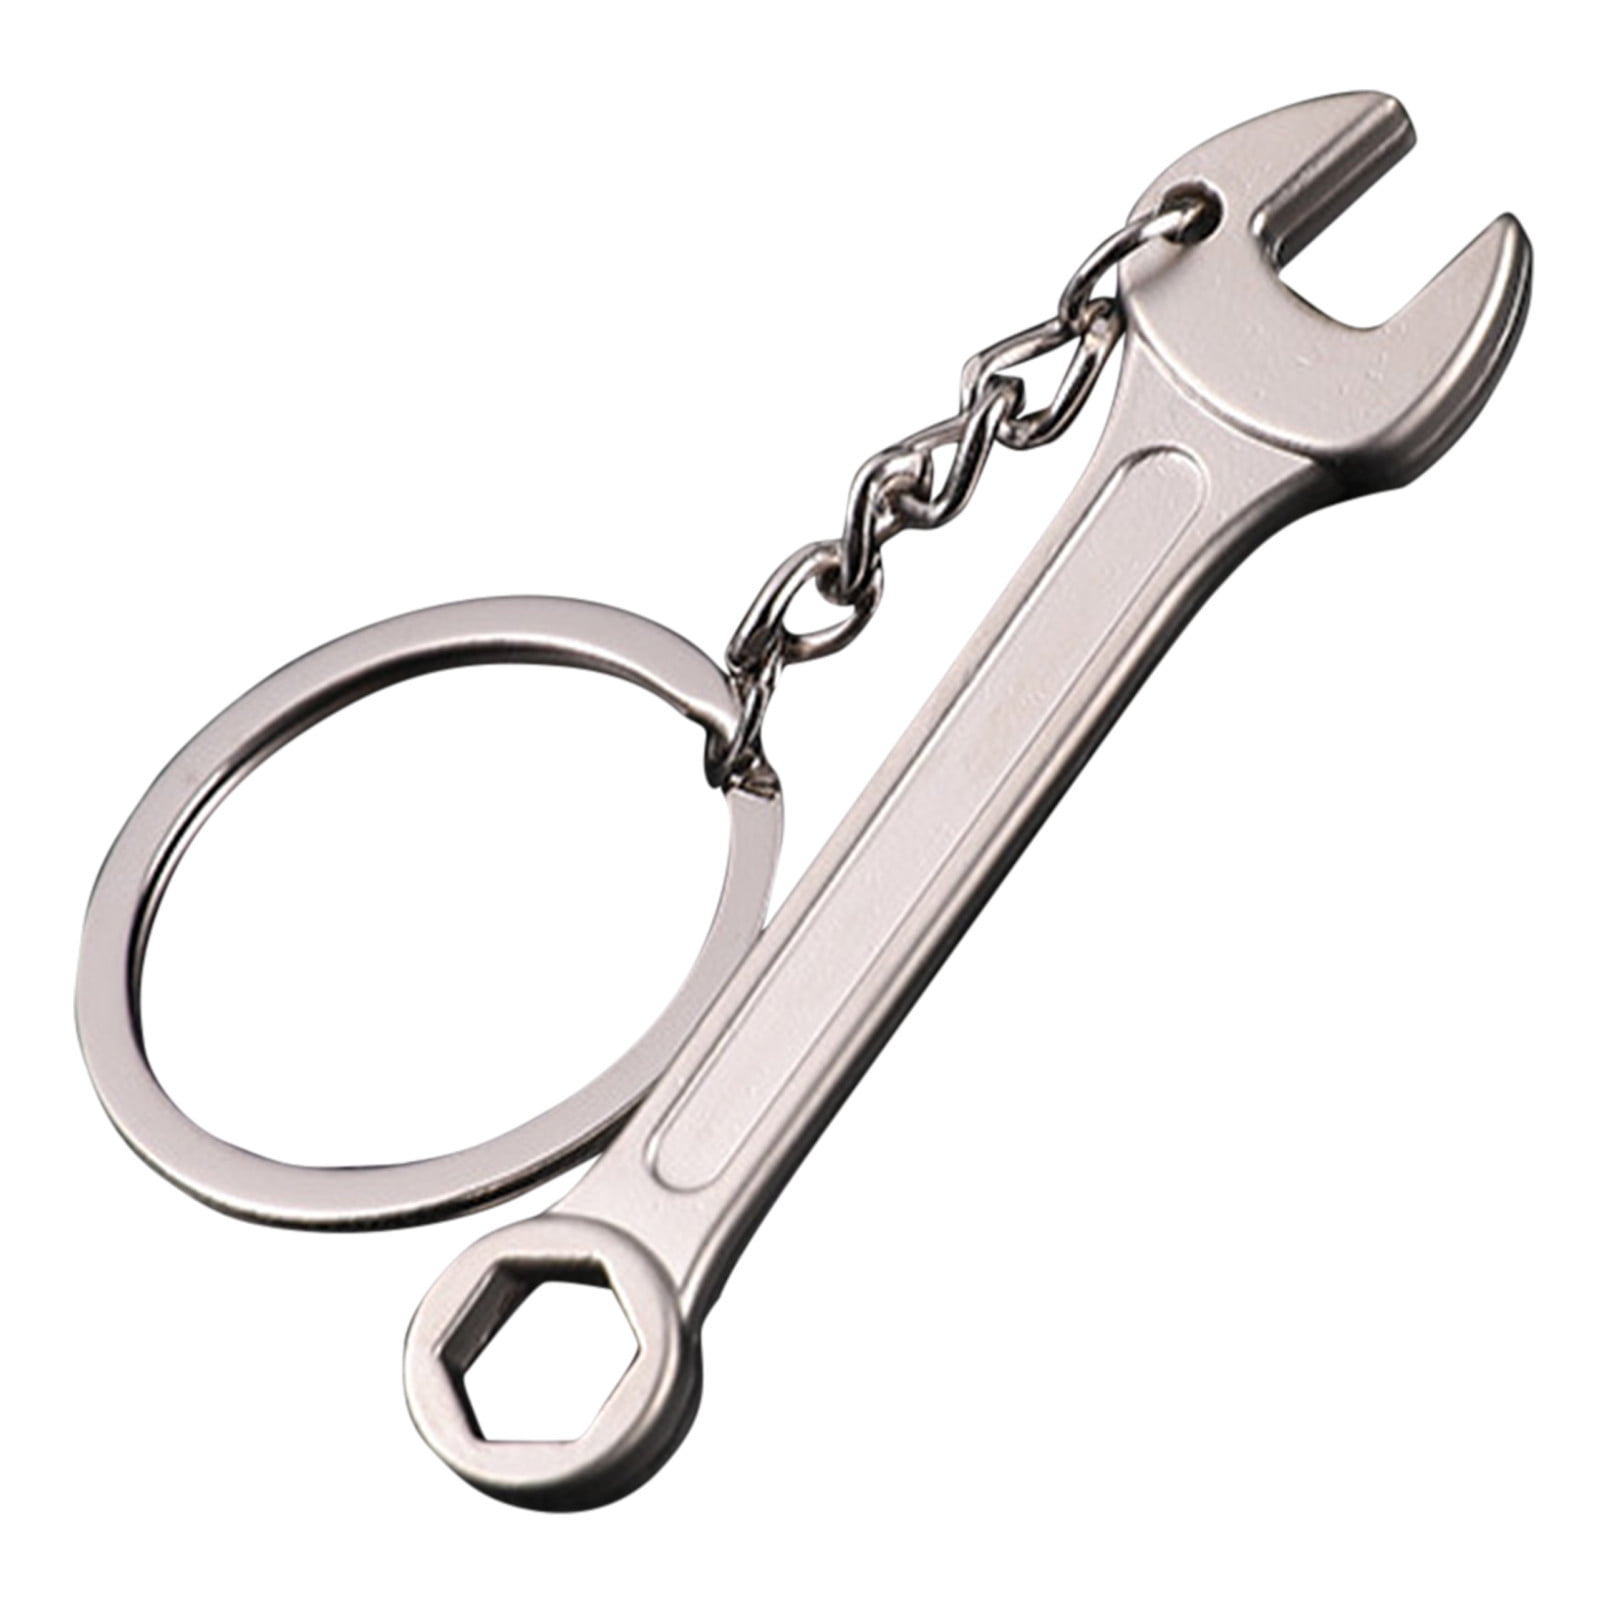 COHEALI 15pcs Key Chain Metal Rings for Crafts D Ring Metal Swivel Snap  Keychain Ring Key Rings for Keychains Keychain Making Supplies Keyring  Spring